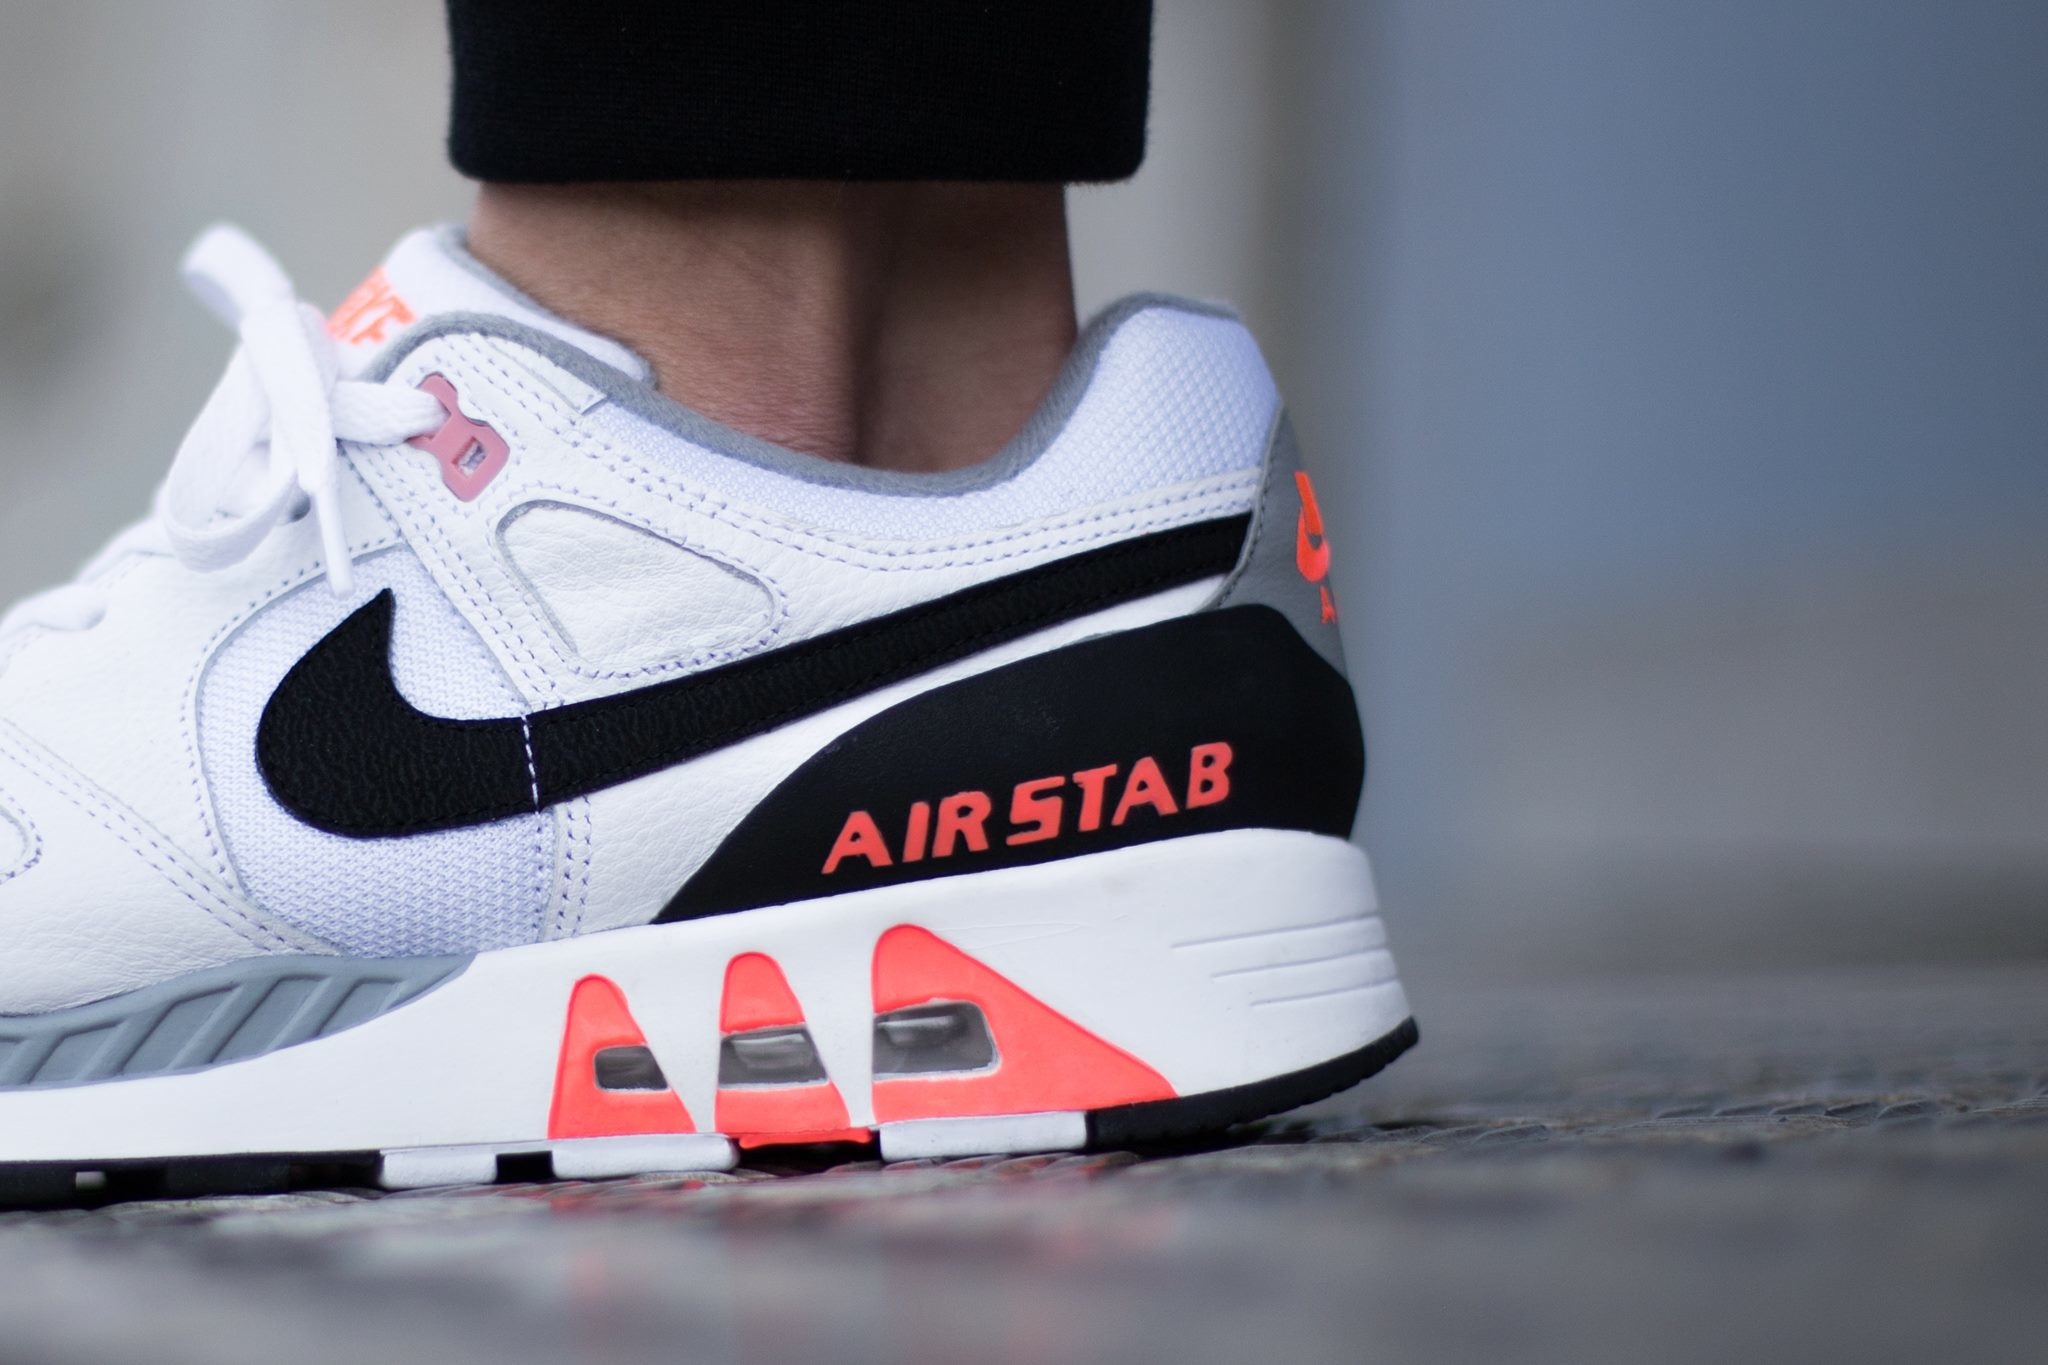 Nike Air Stab Infrared